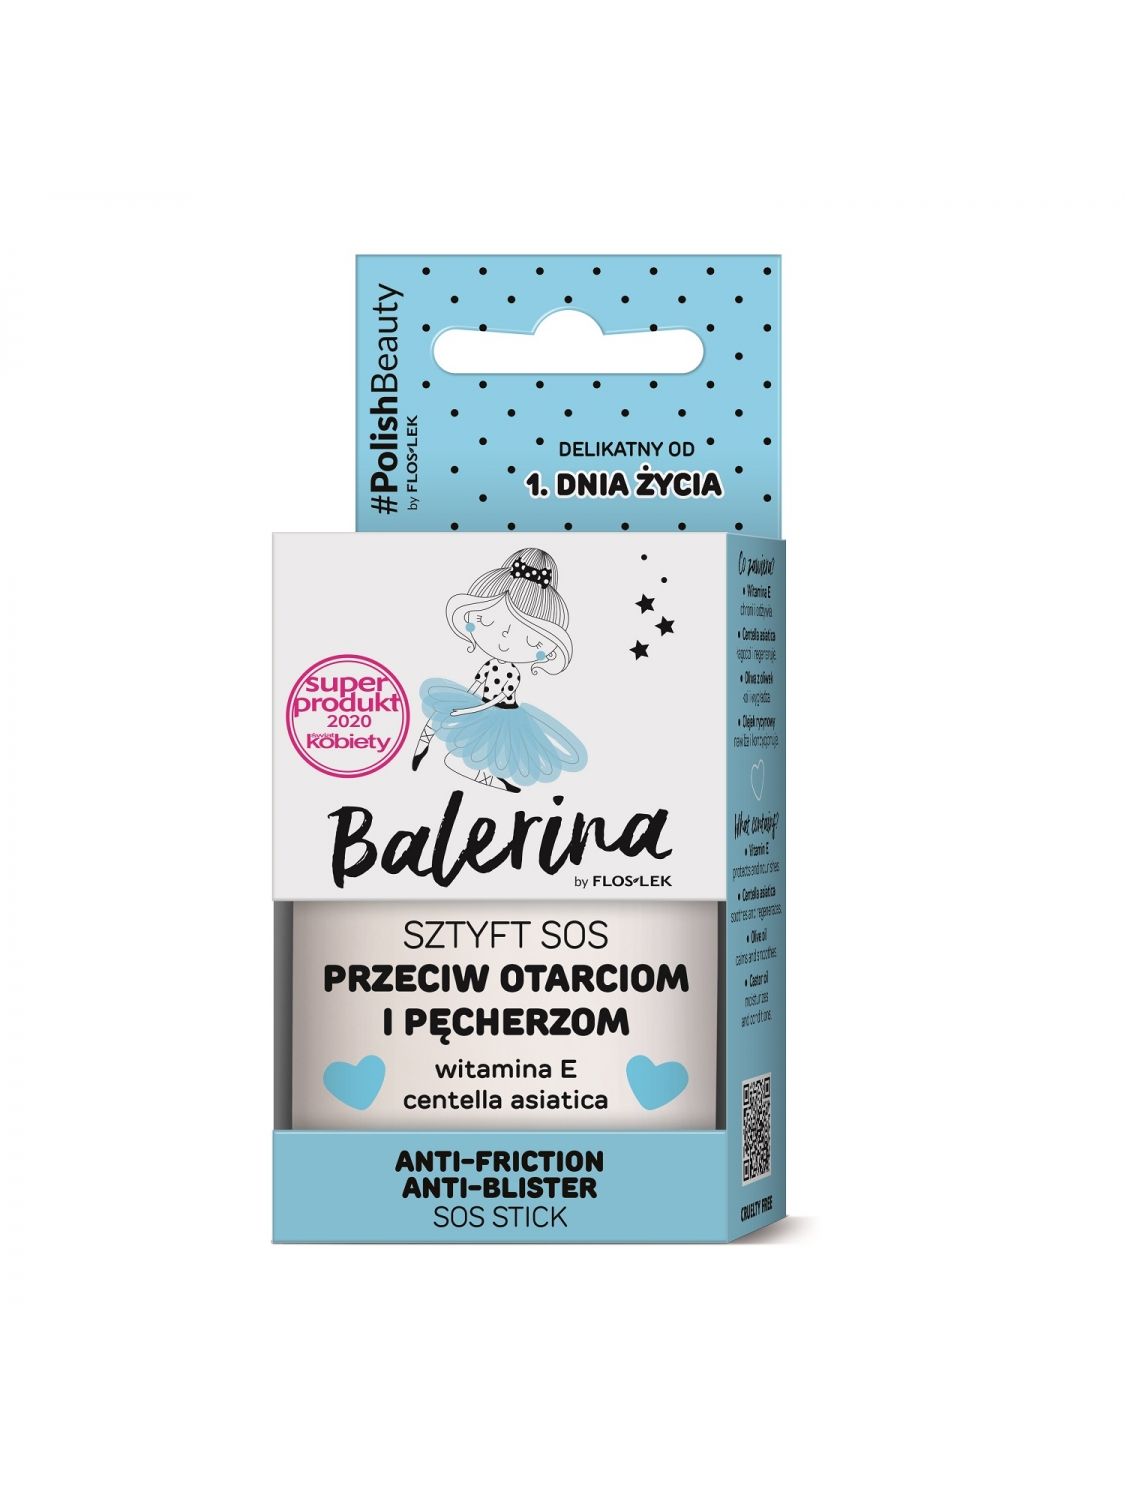 Balerina Anti-Friction Anti-Blister SOS Stick vitamin E, centella asiatica - 20g - Floslek